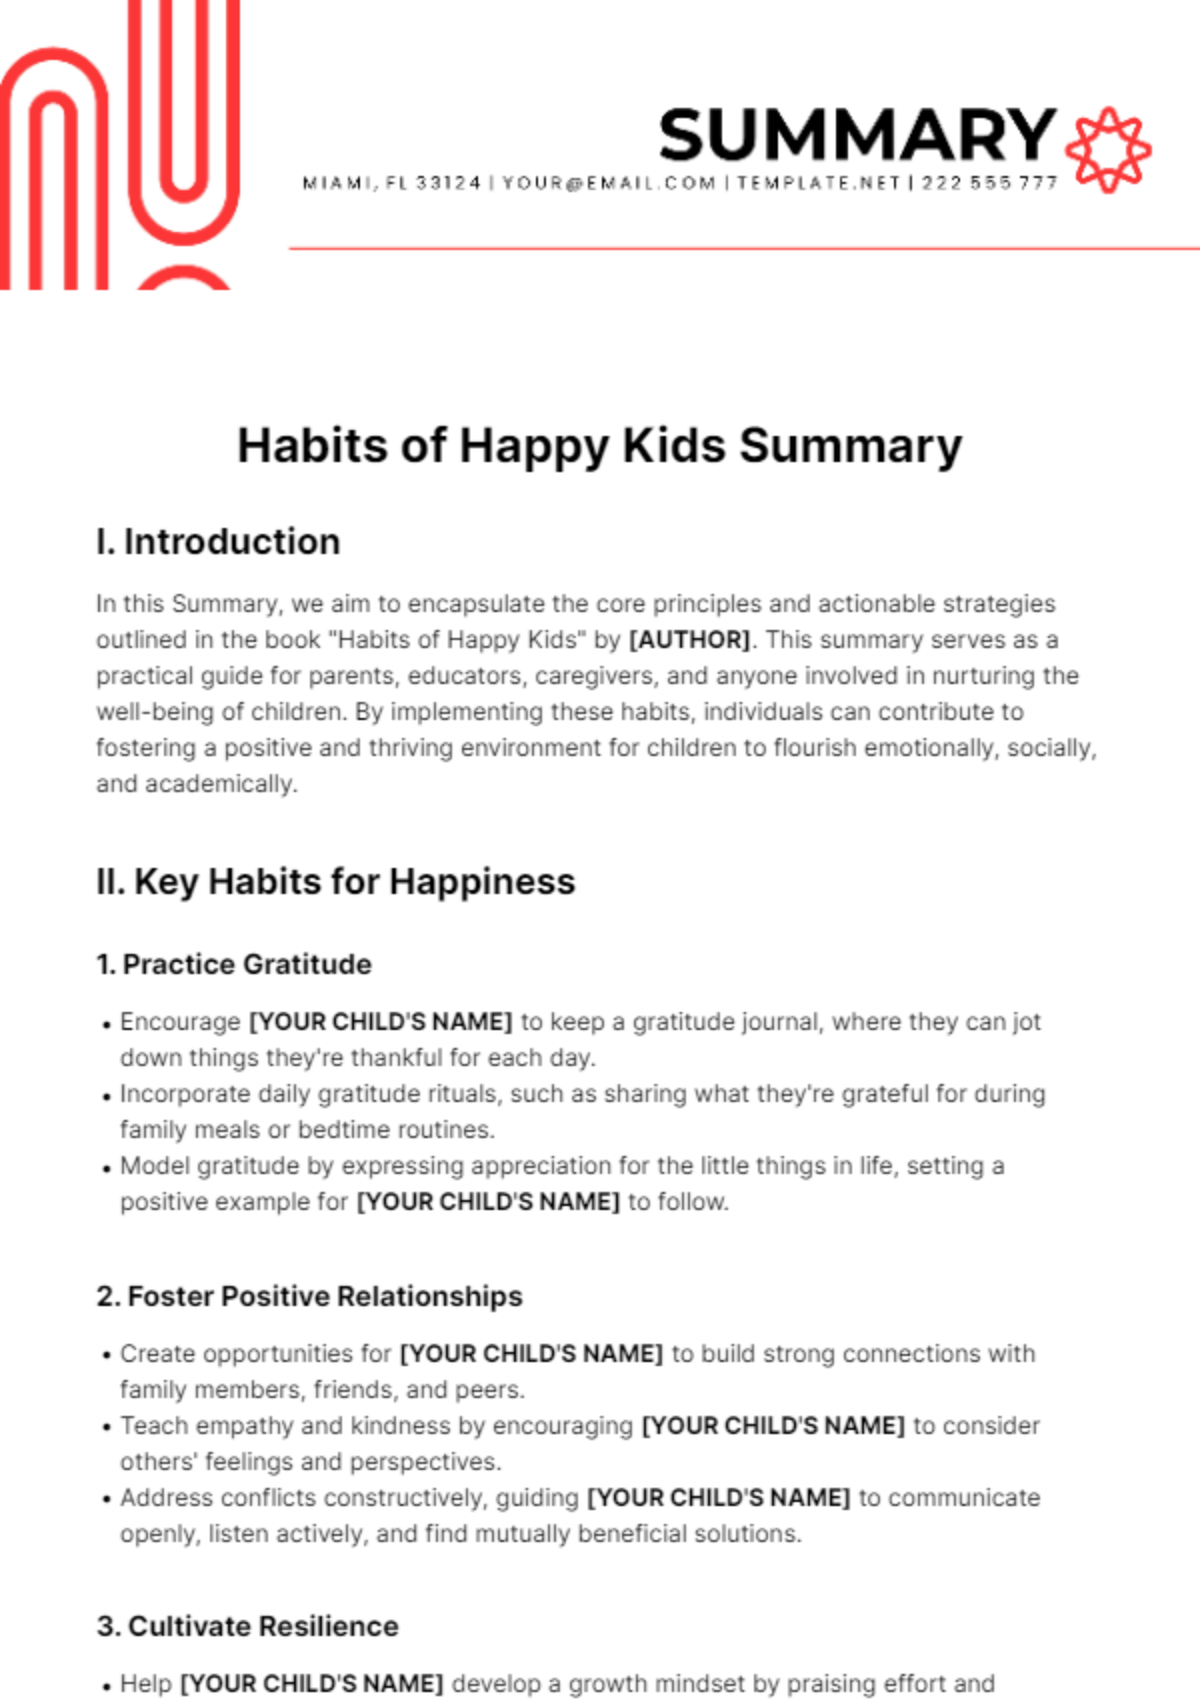 Habits of Happy Kids Summary Template